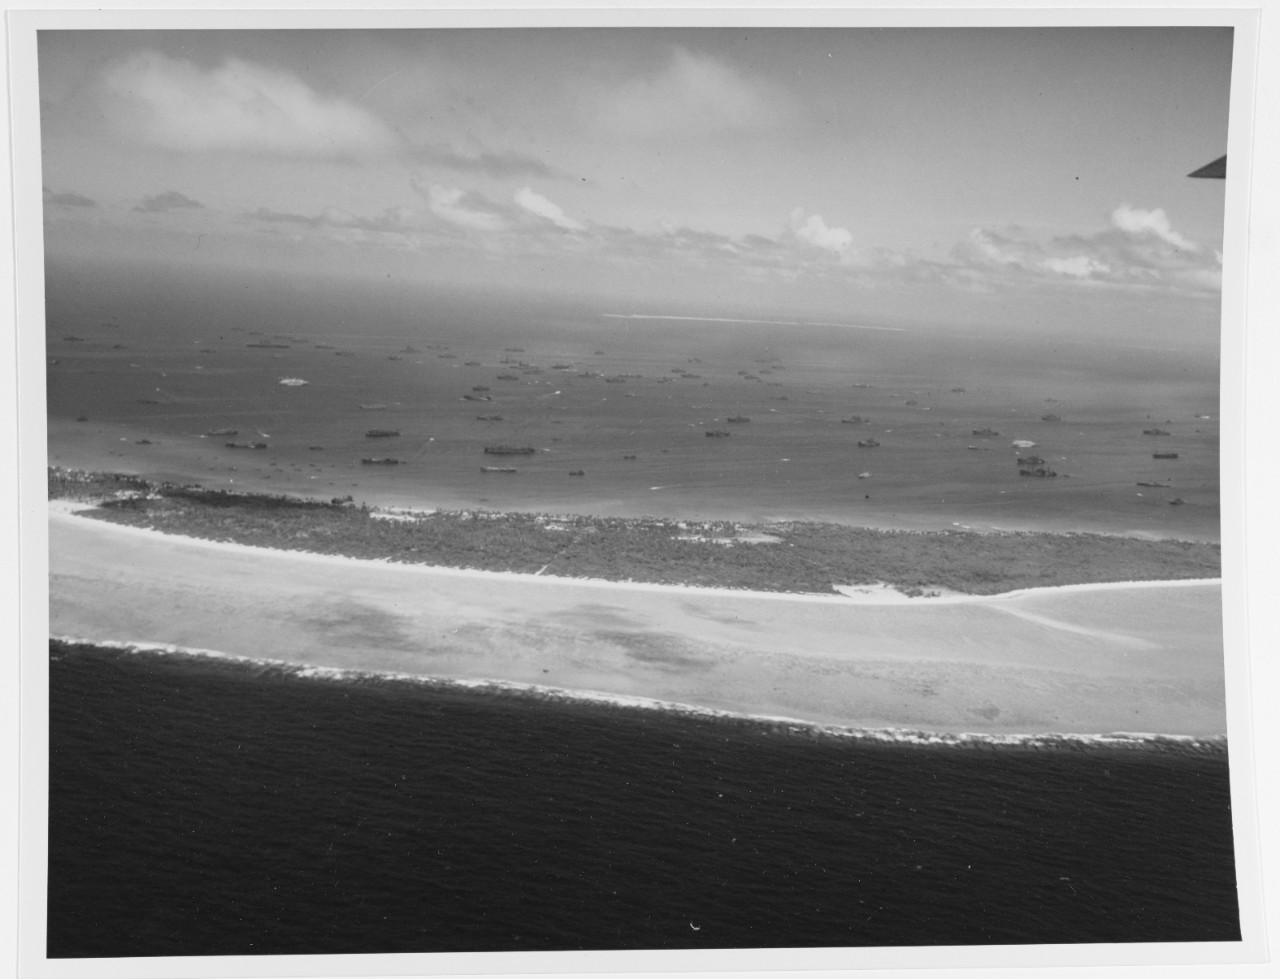 Bikini Atoll A-Bomb Tests, 1946